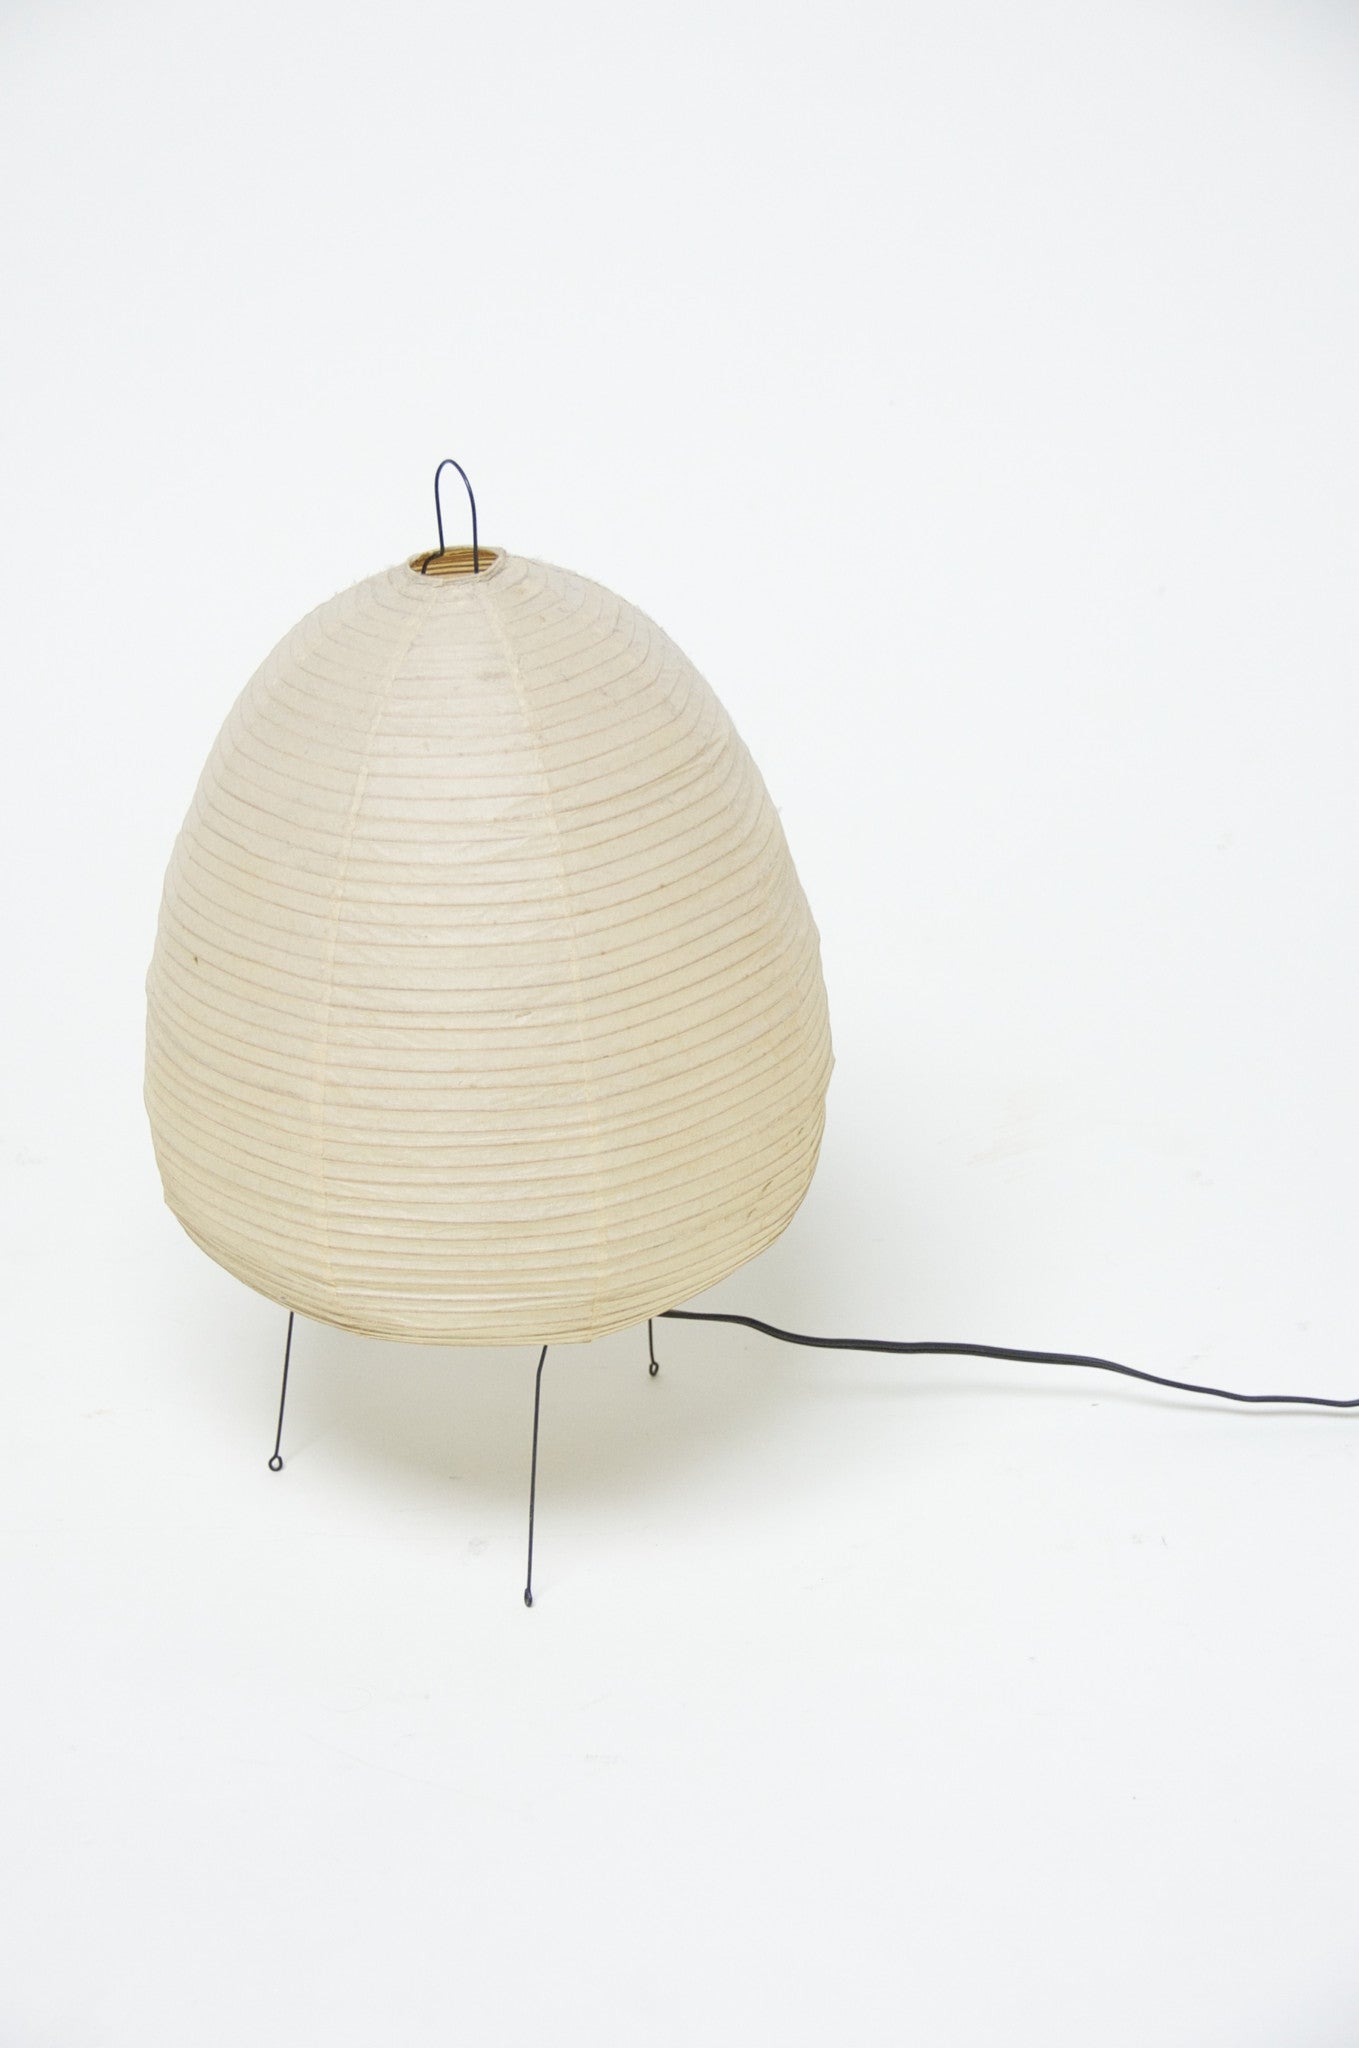 SOLD Isamu Noguchi Table Lamp By Akari Vintage